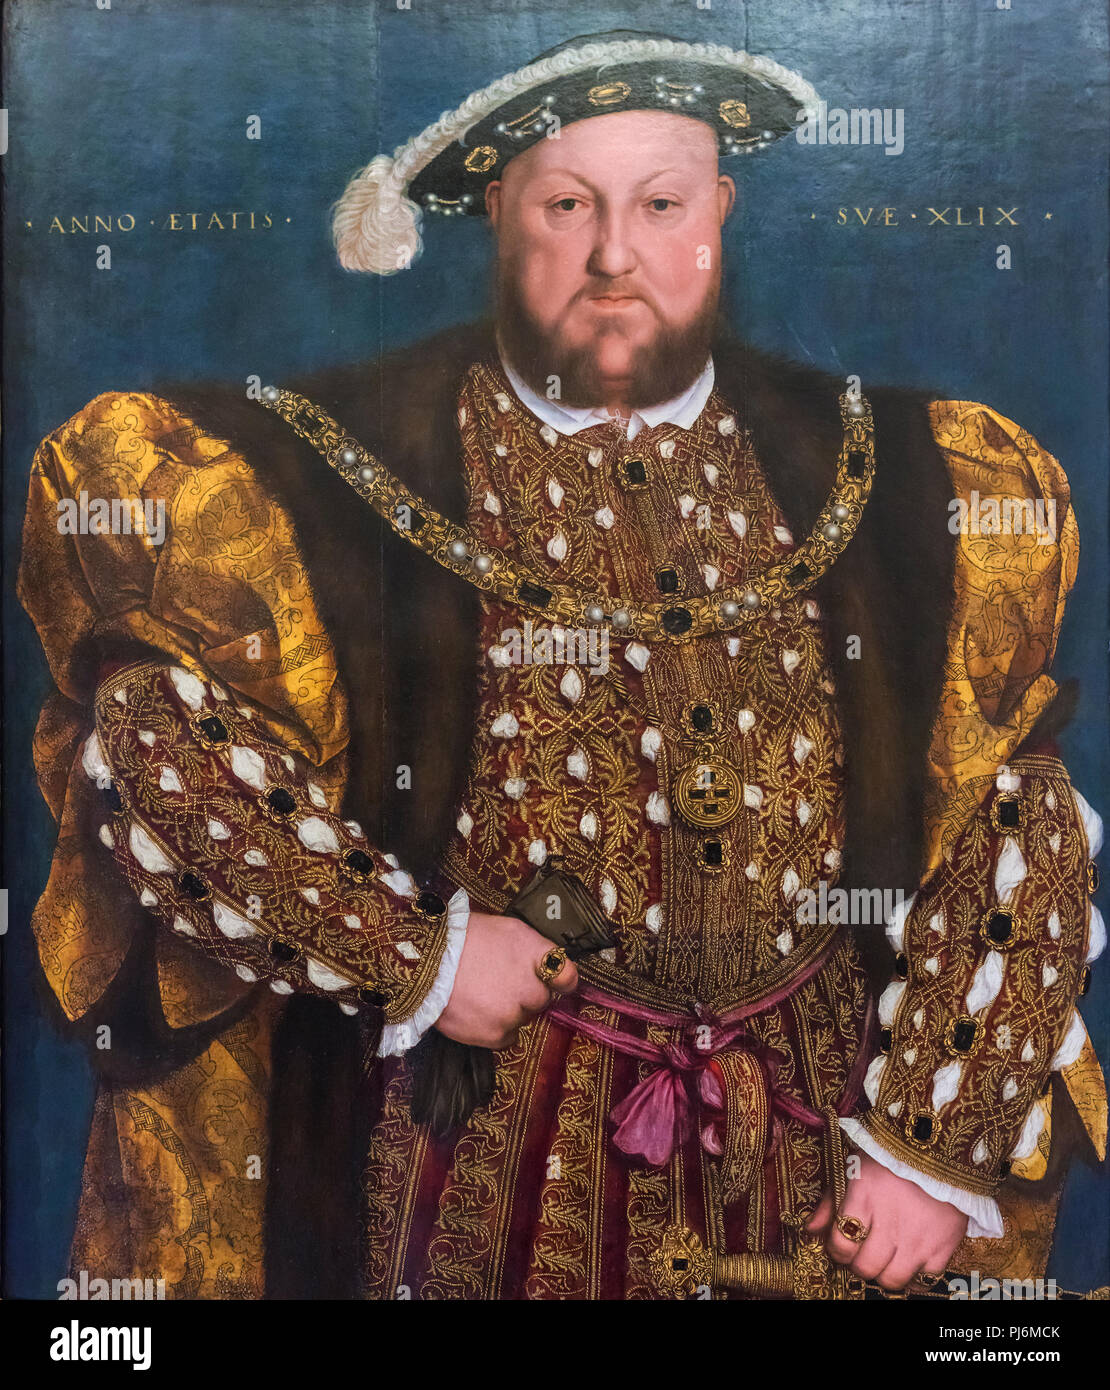 Retrato del Rey Enrique VIII, por Hans Holbein, la Galleria Nazionale d'Arte Antica, GNAA, Galería Nacional de Arte Antiguo, la galería de arte, el Palazzo Barberini, Foto de stock